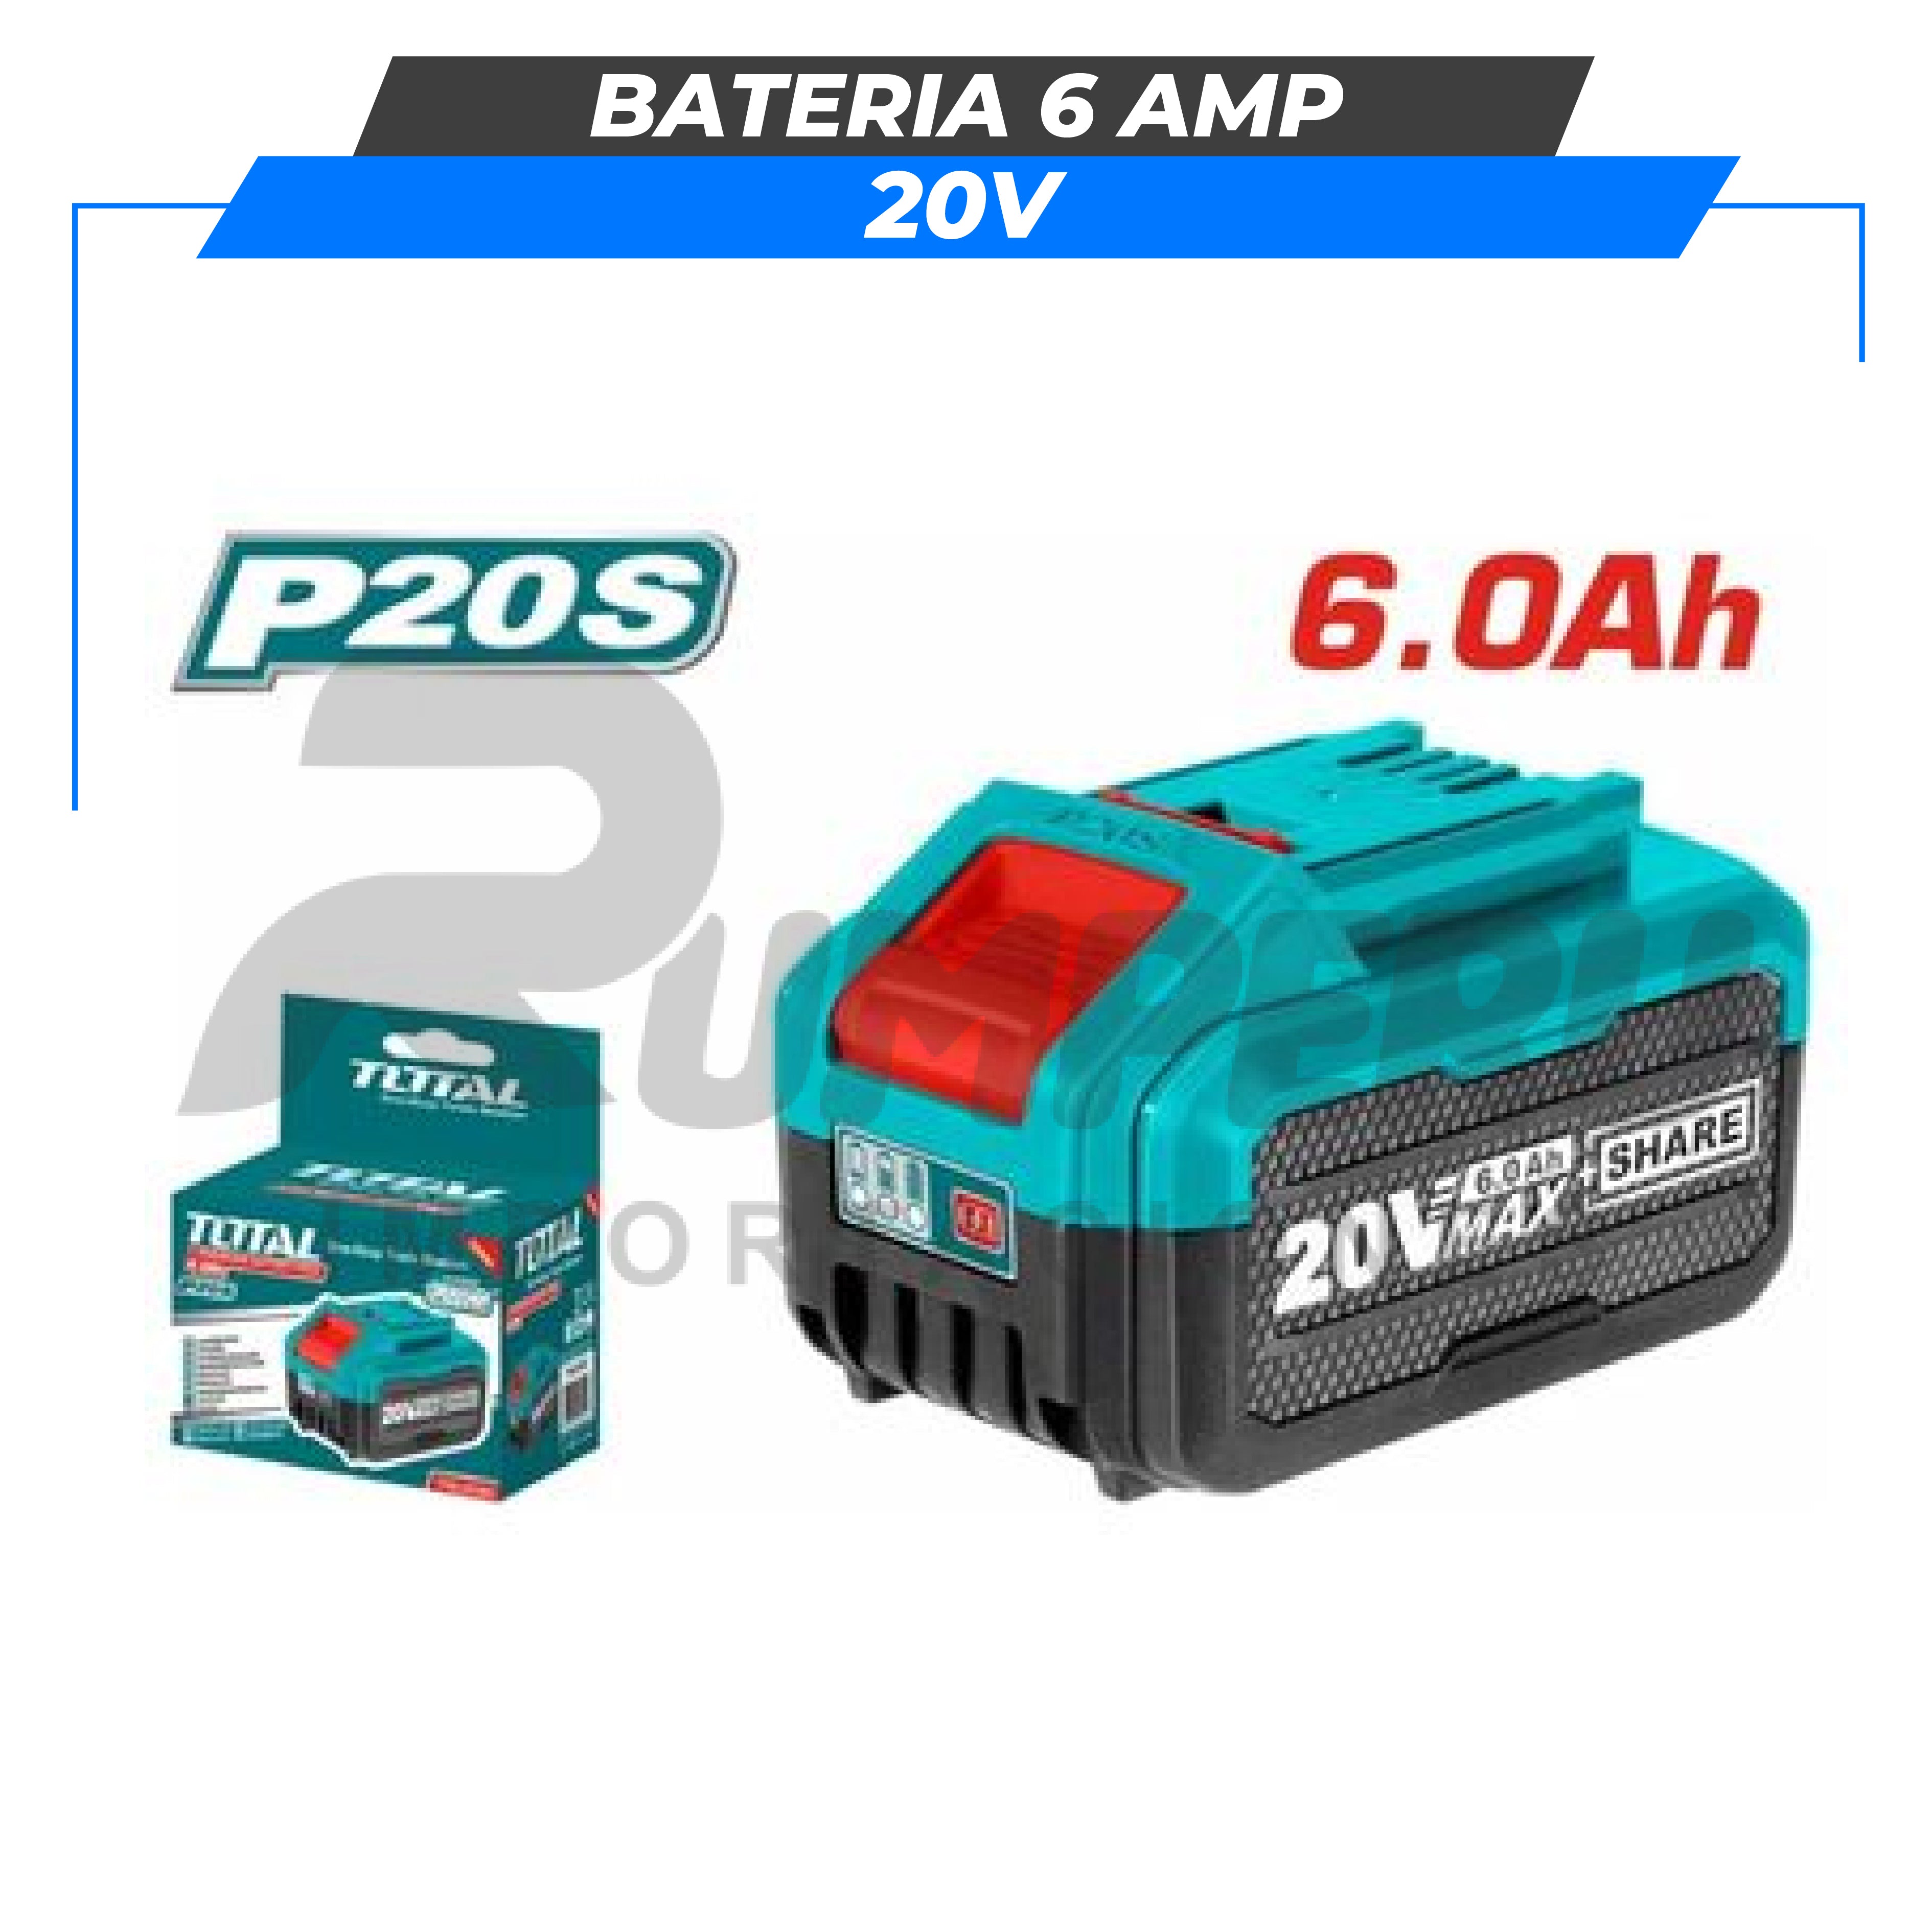 Bateria 20v 6 amp